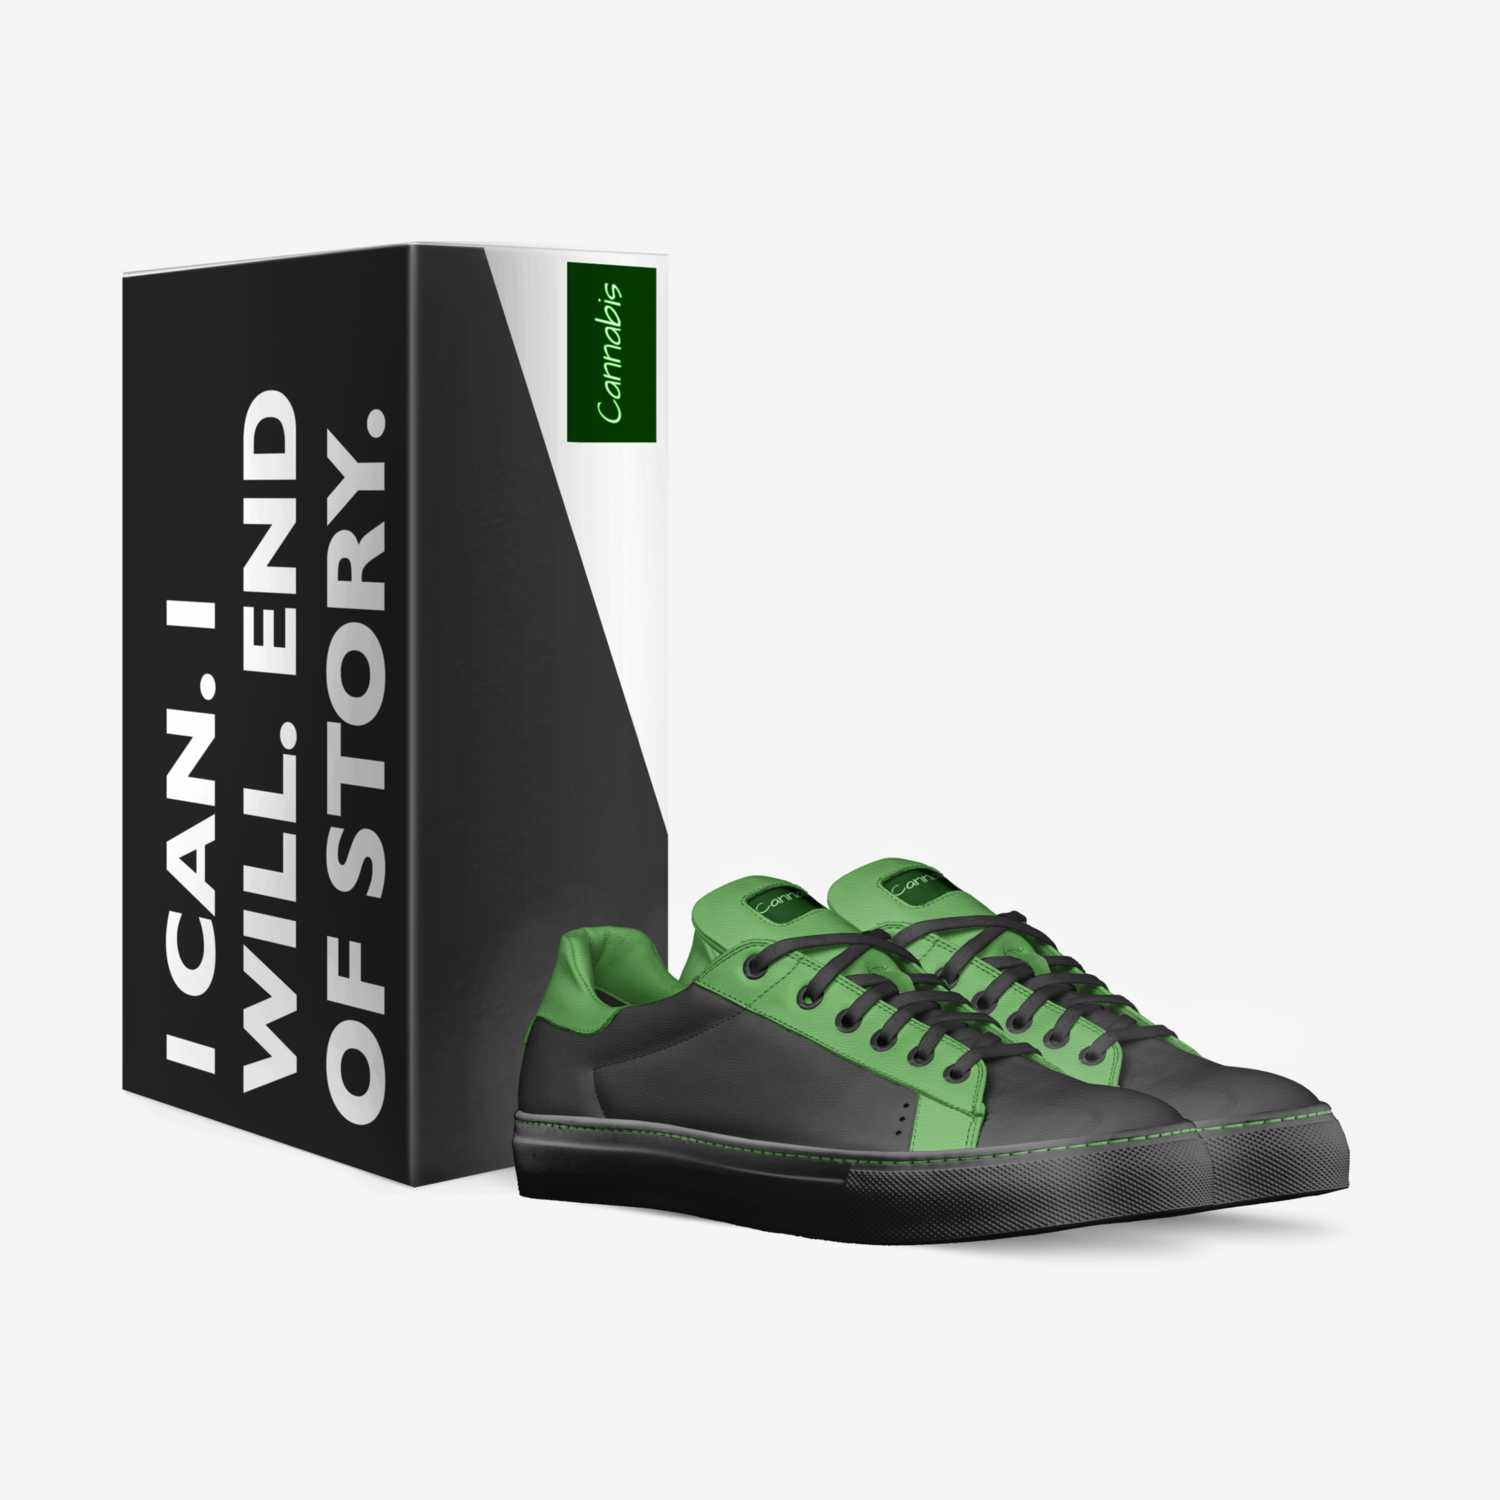 Peji 1 custom made in Italy shoes by Tela Jones | Box view